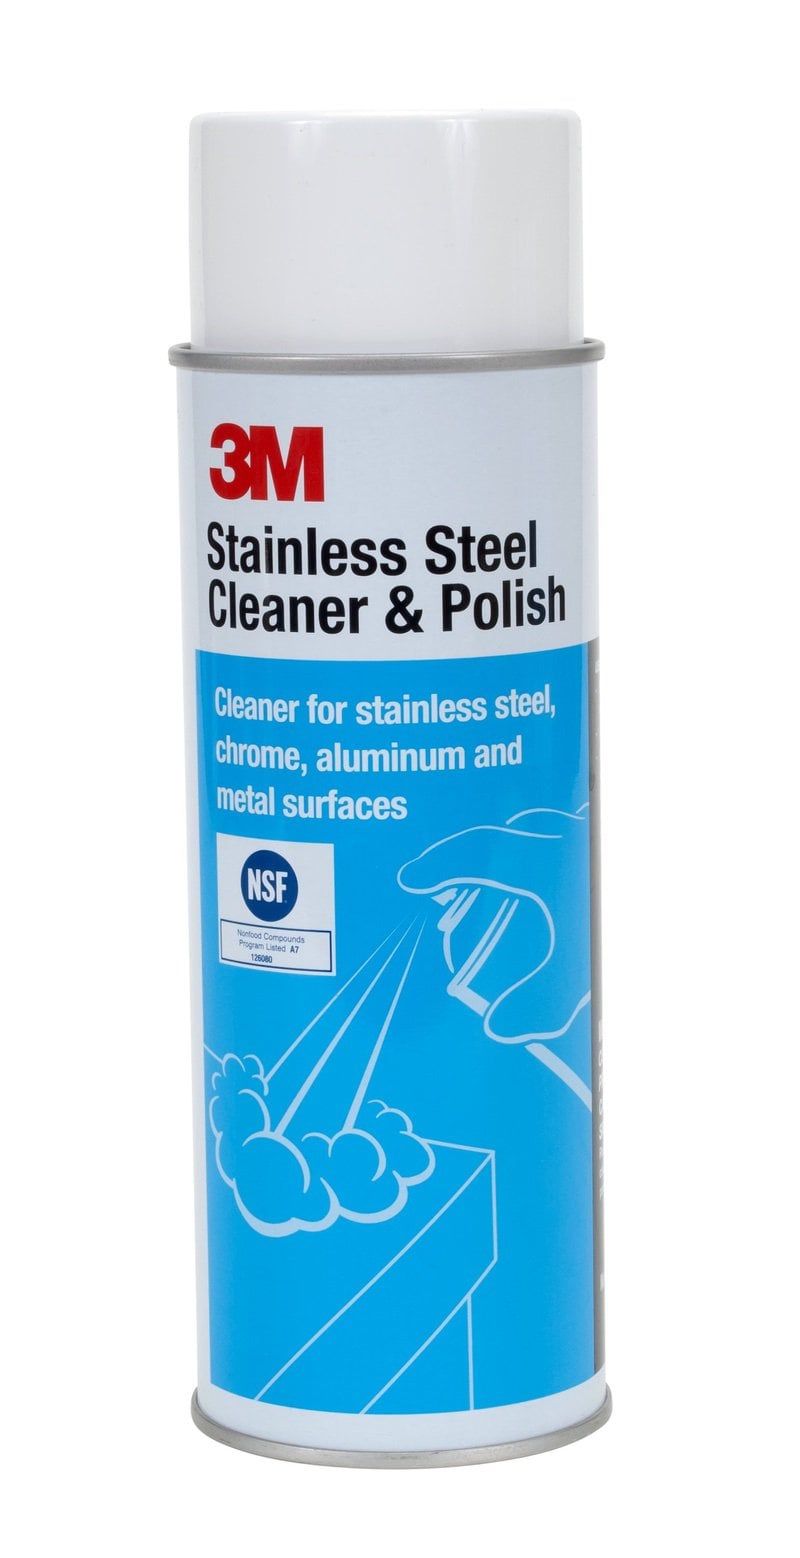 3M™ Stainless Steel Cleaner & Polish Aerosol, 600 ml, 12/Case